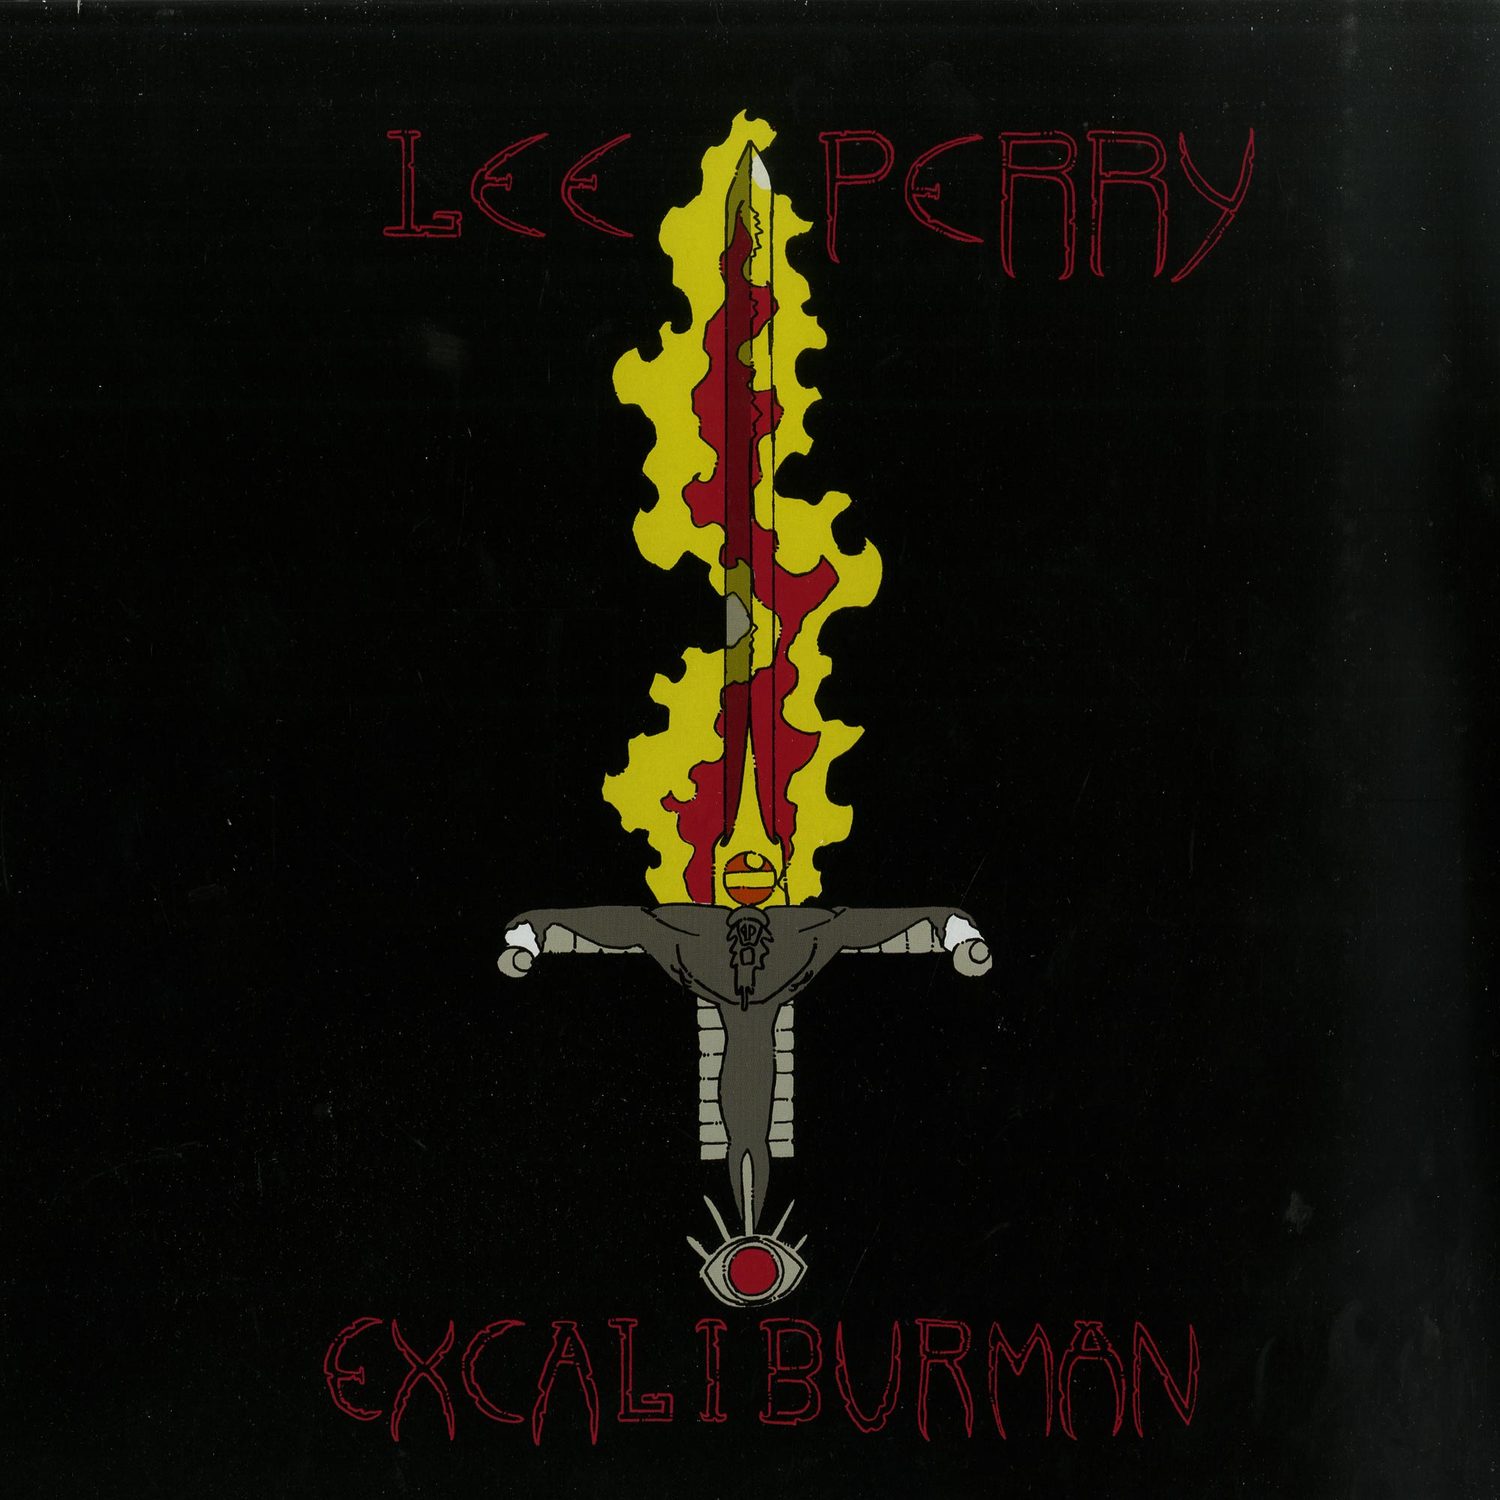 Lee Perry - EXCALIBURMAN 